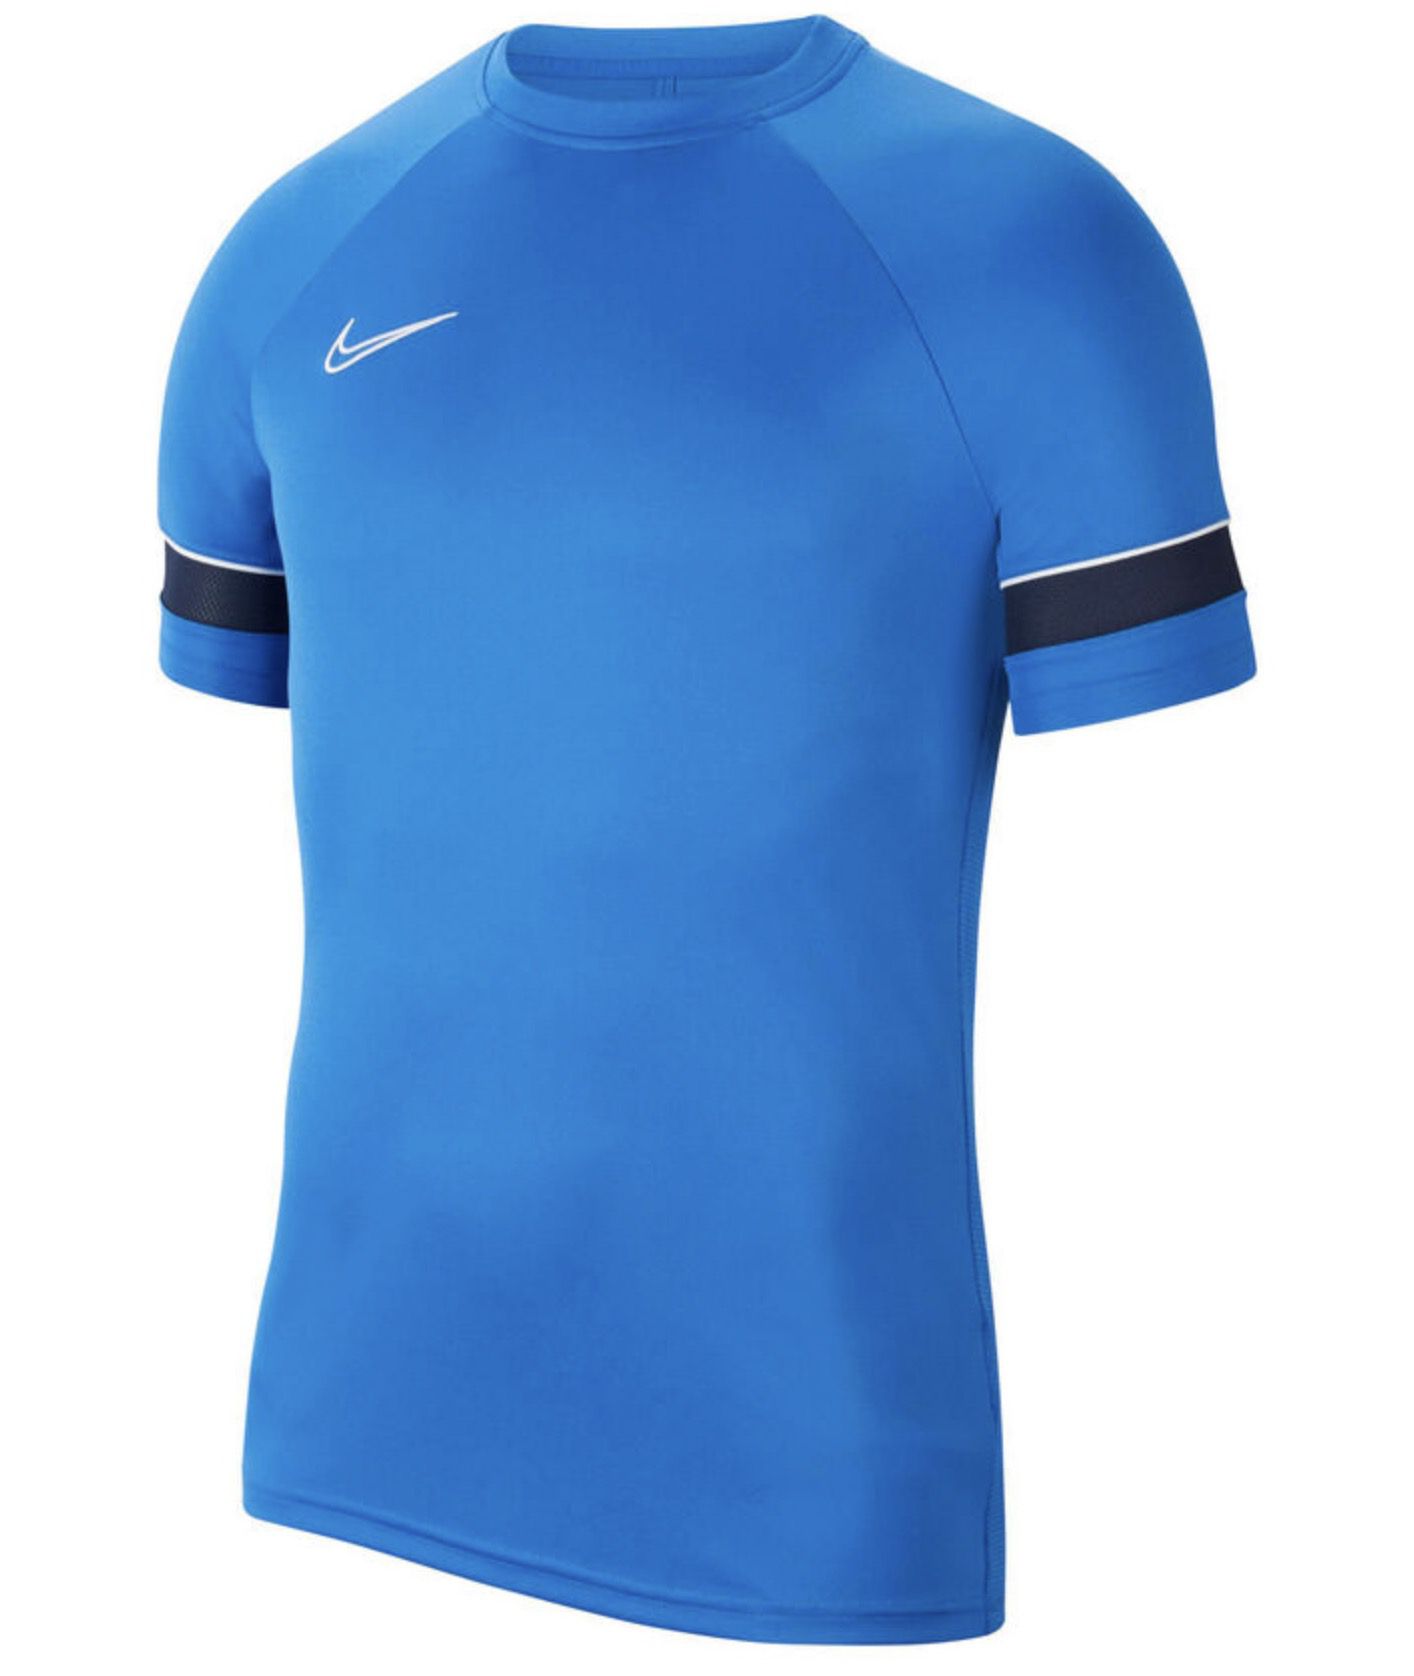 Nike Dri Fit Academy 21 Trainings Shirt für 11,44€ (statt 15€)